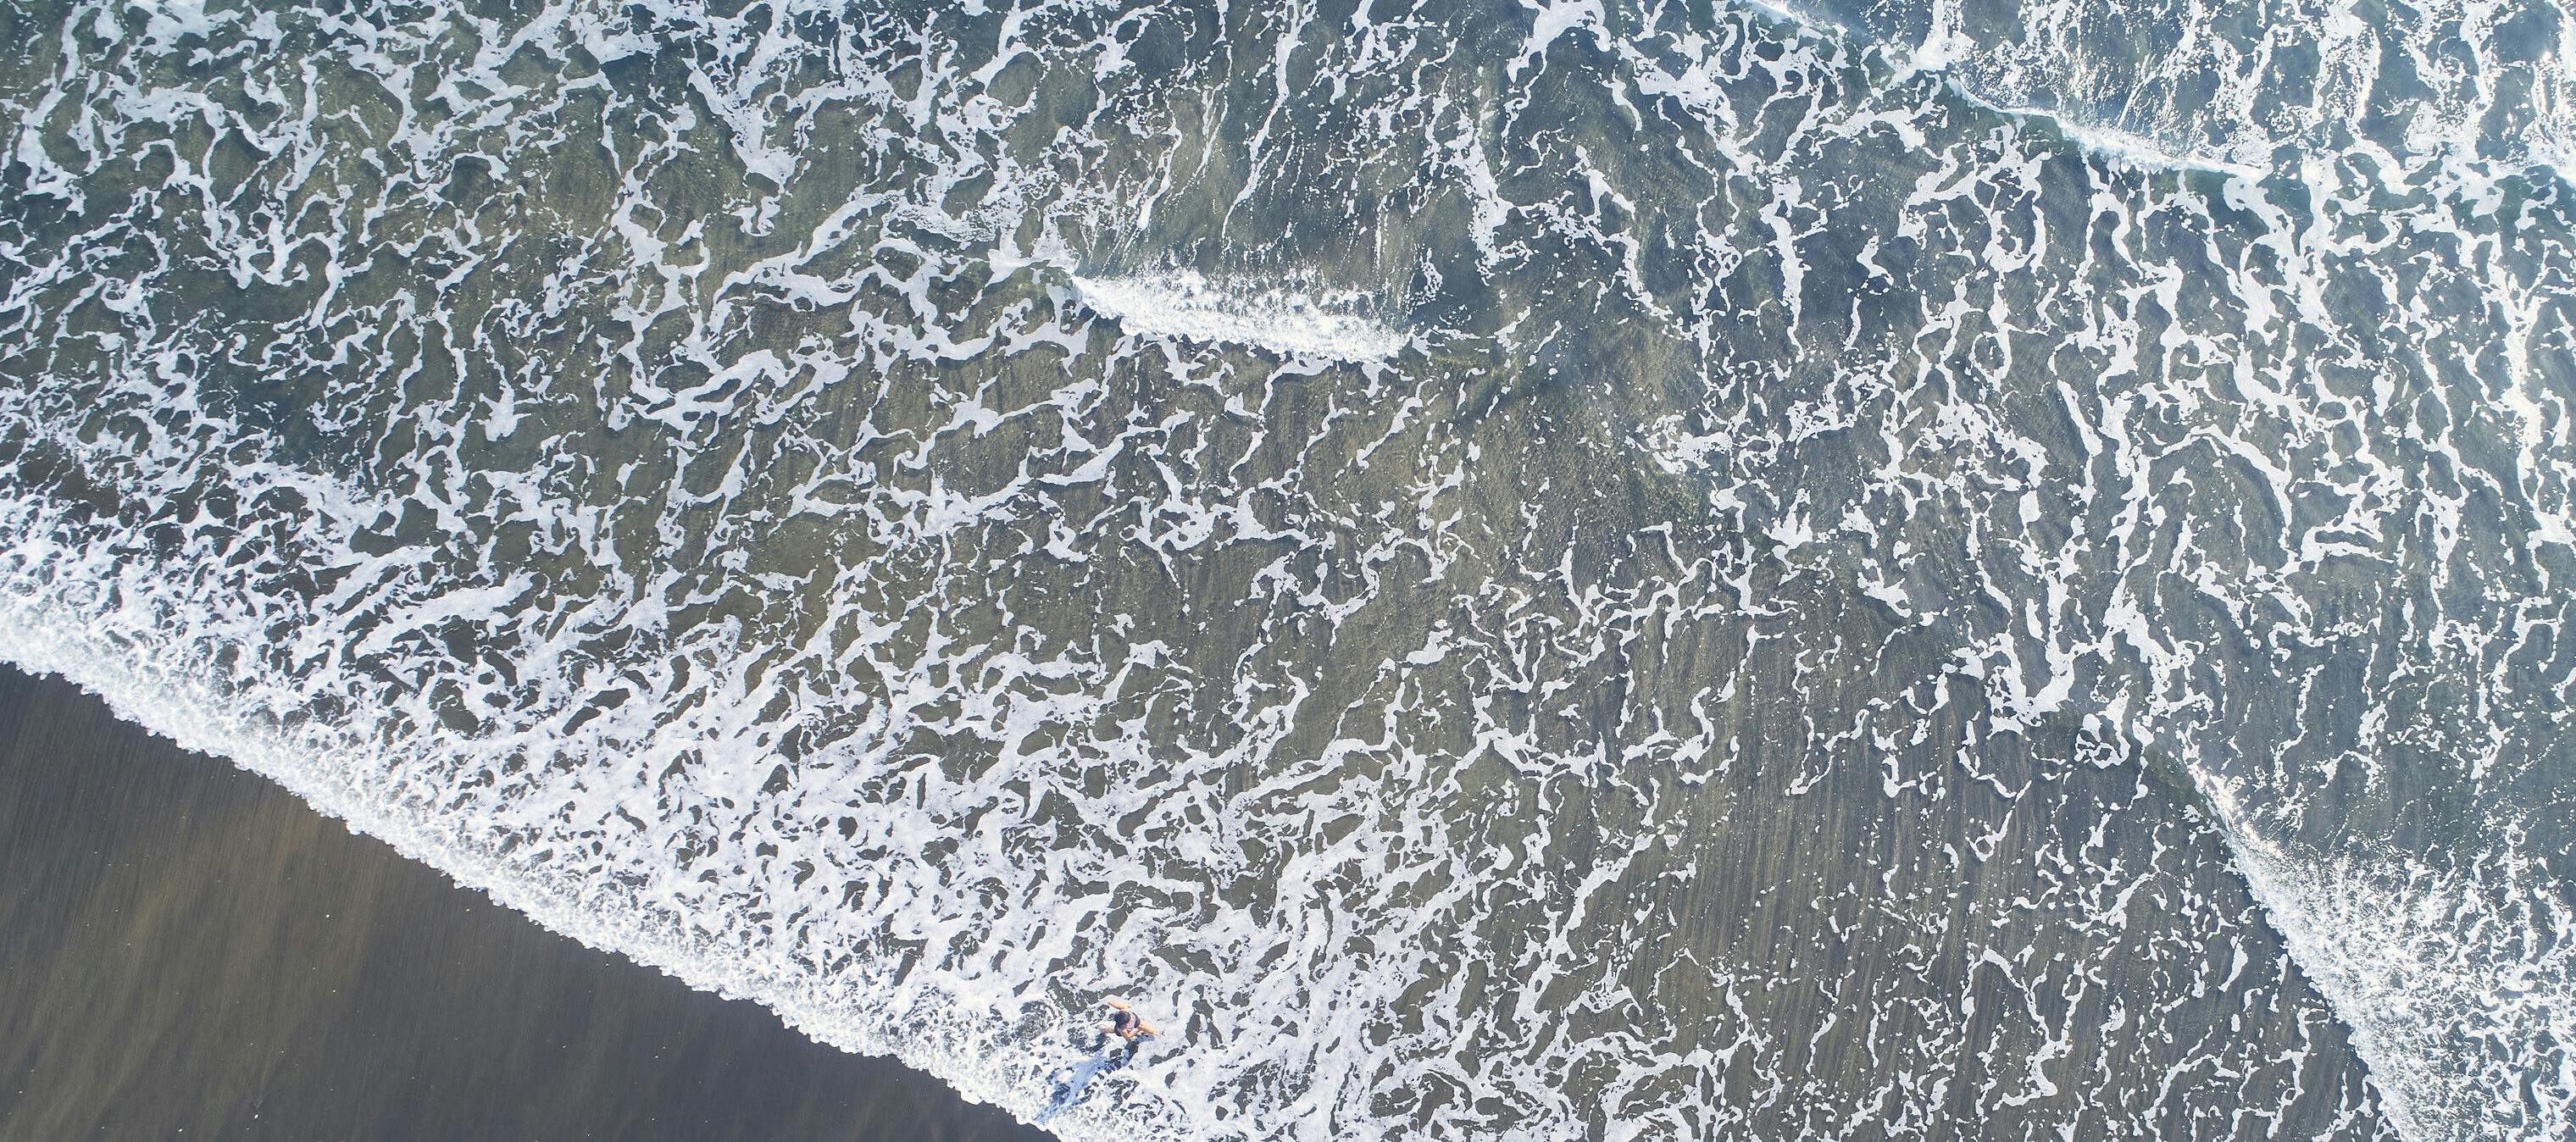 Waves onto the beach